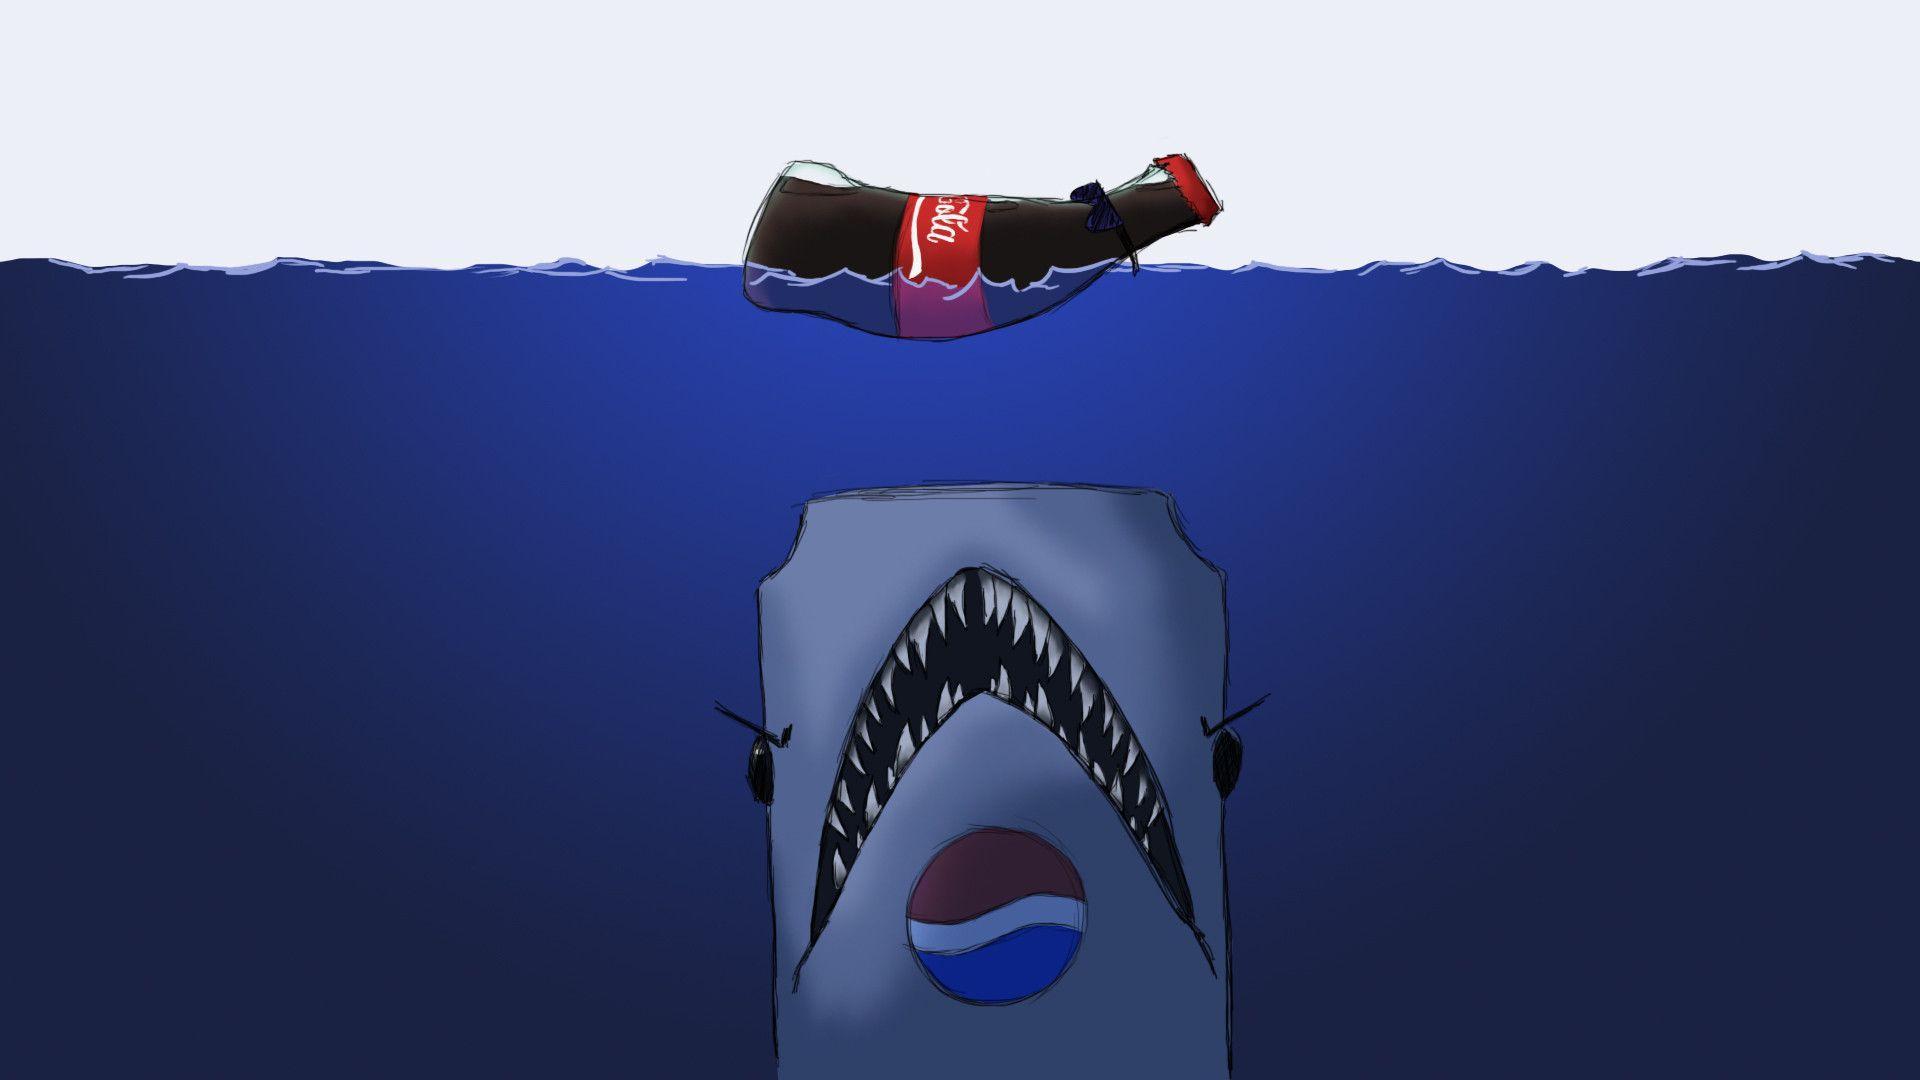 Pepsi Cola Wallpaper